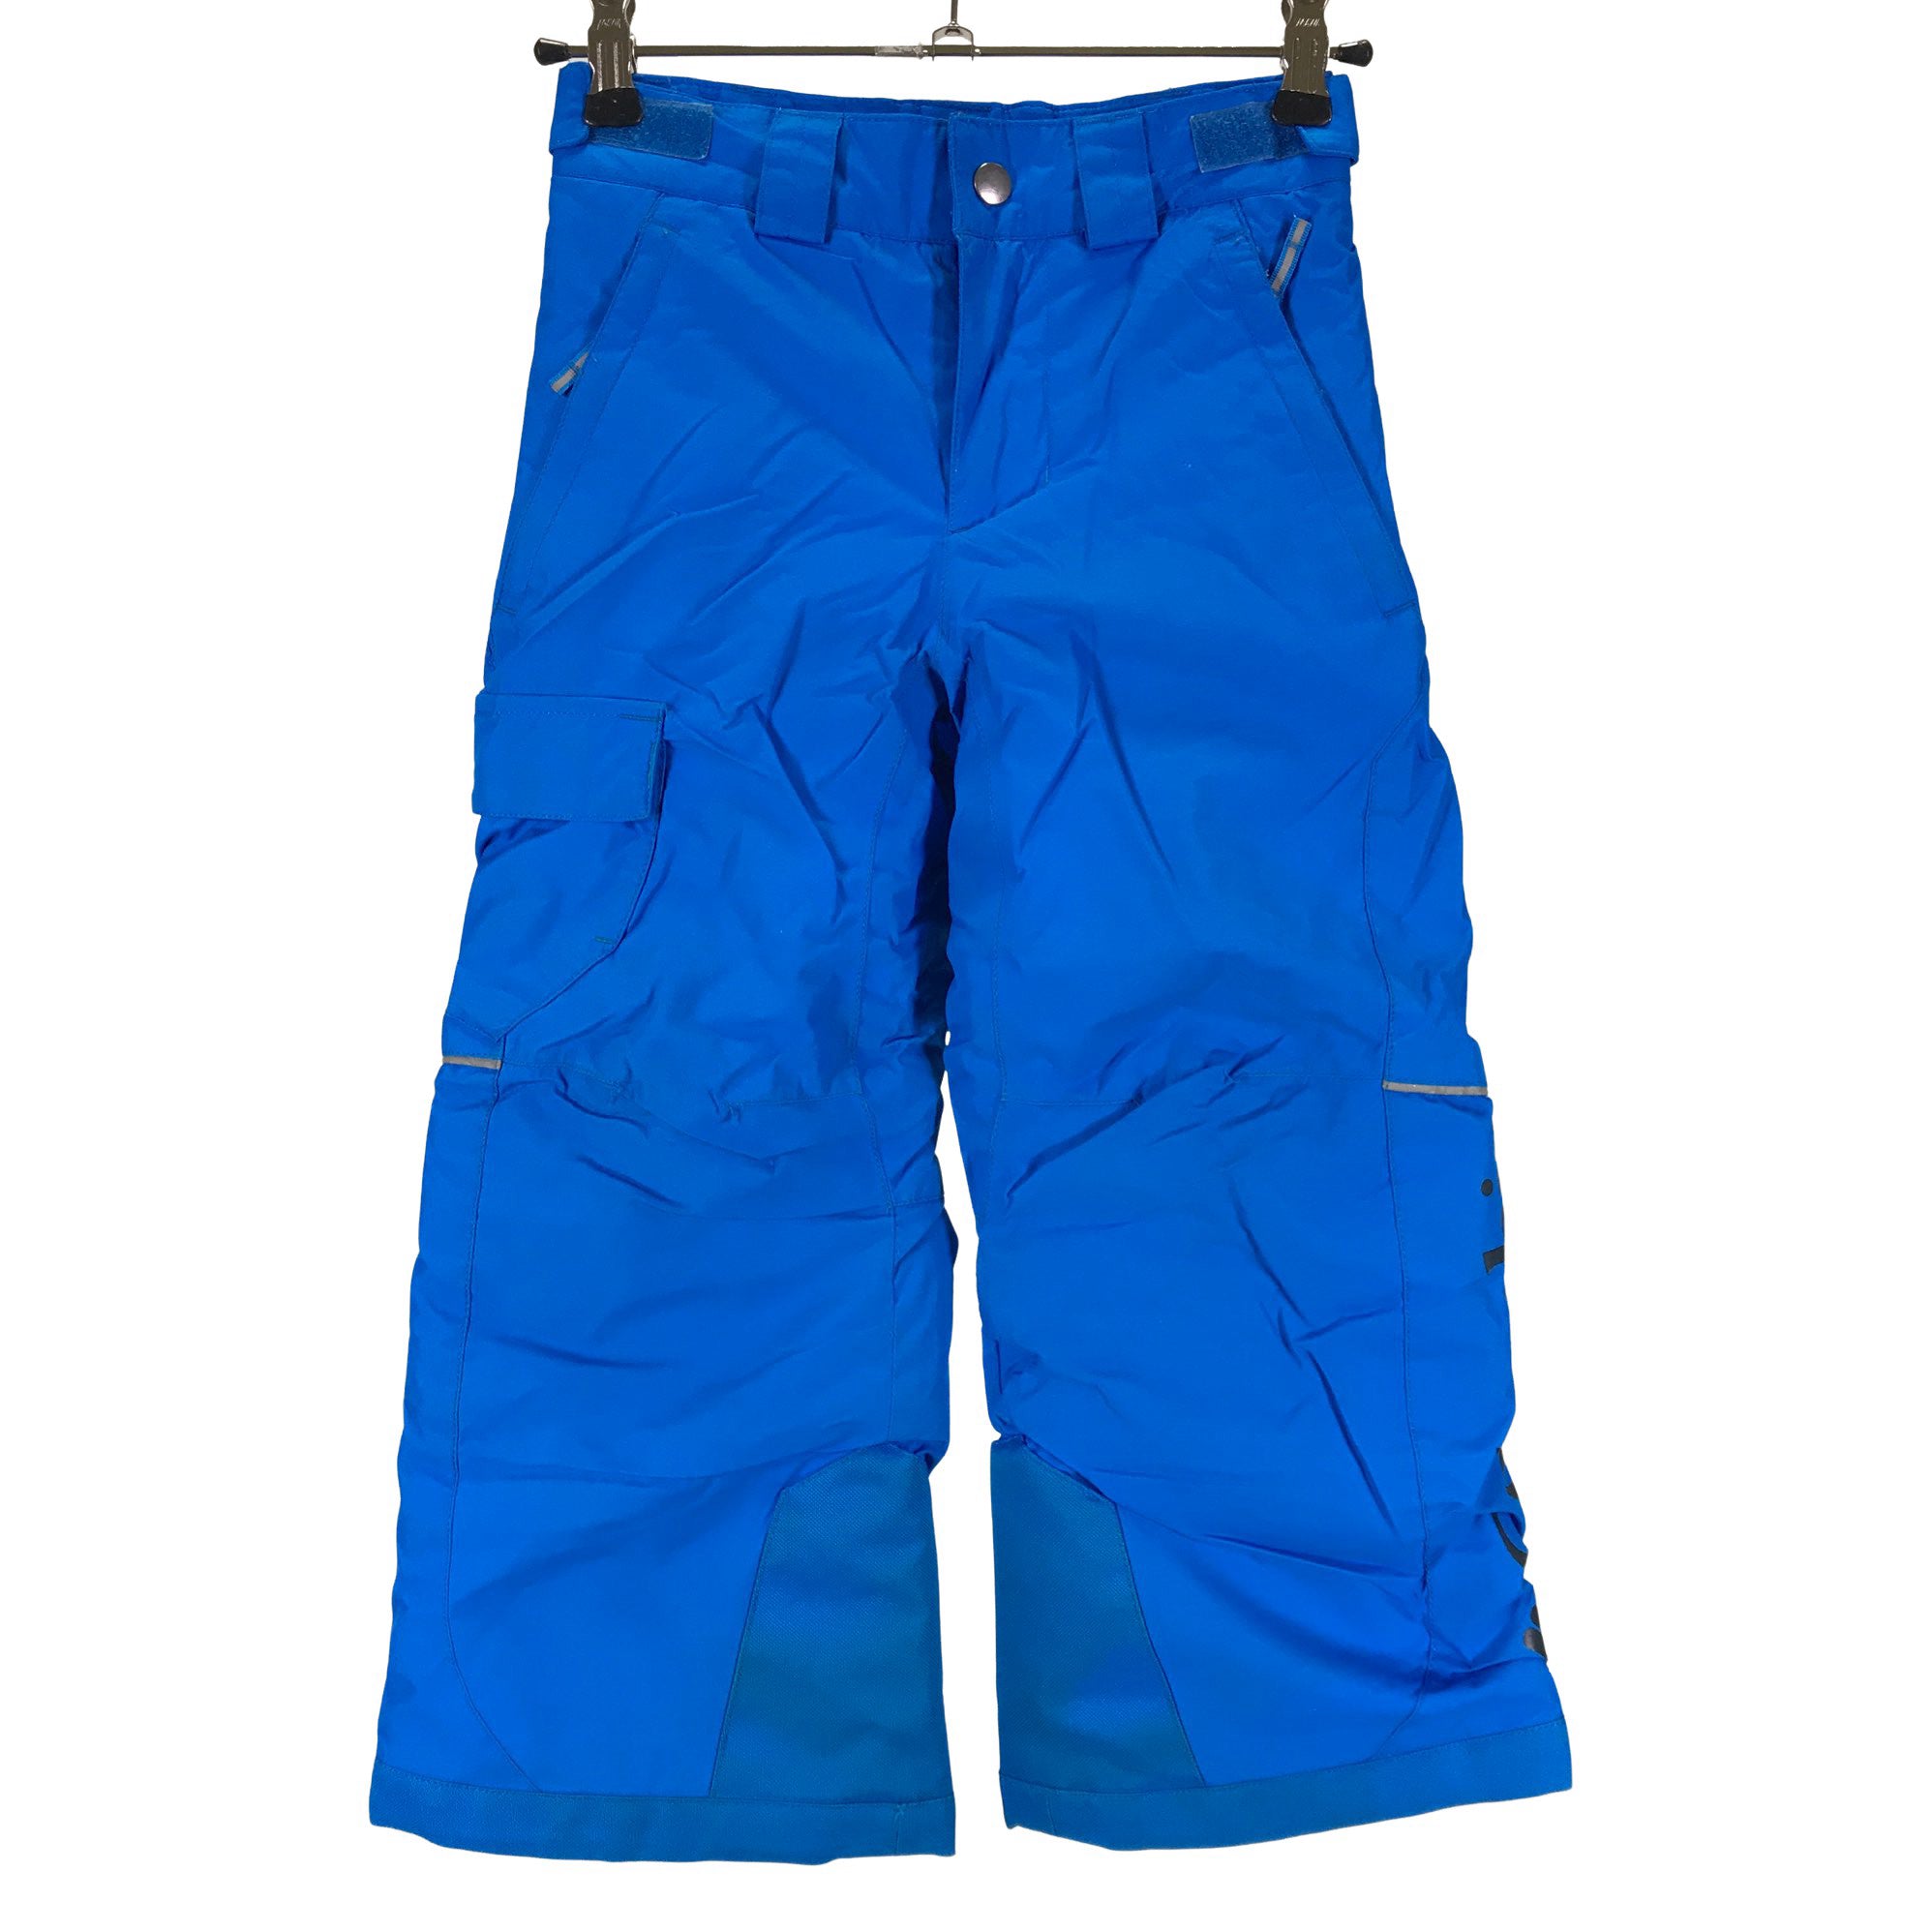 Unisex Columbia Winter pants, size 104 - 110 (Blue)